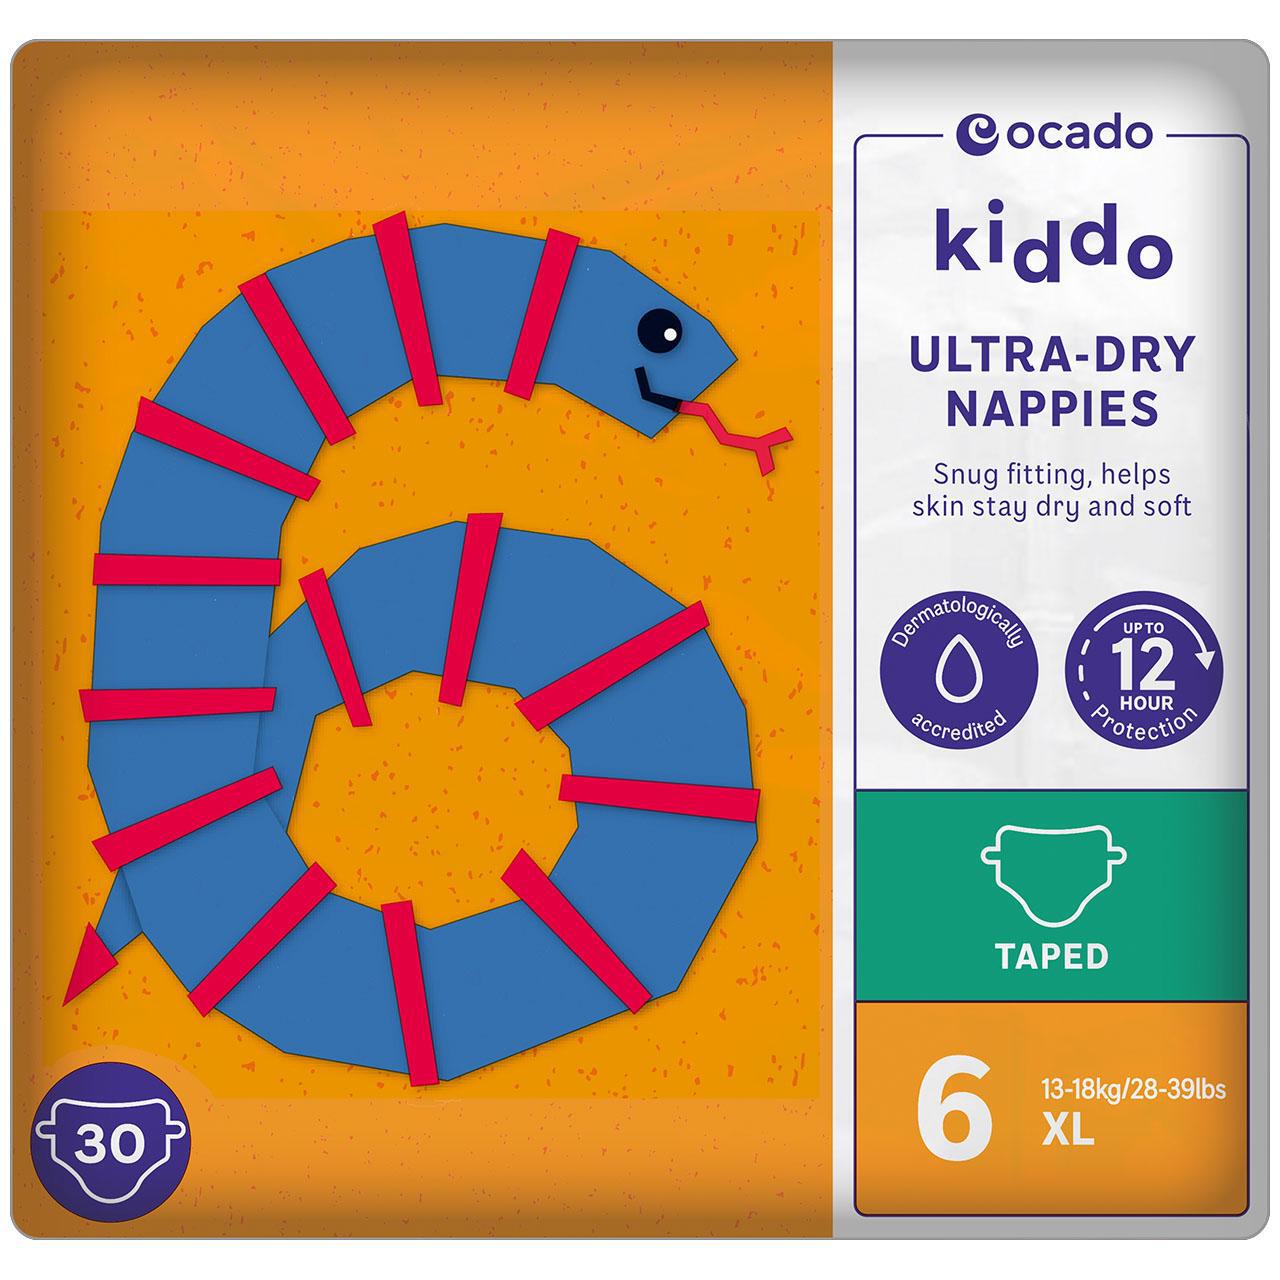 Ocado Kiddo Ultra-Dry Nappies Size 6 (13-18kg) 30 per pack